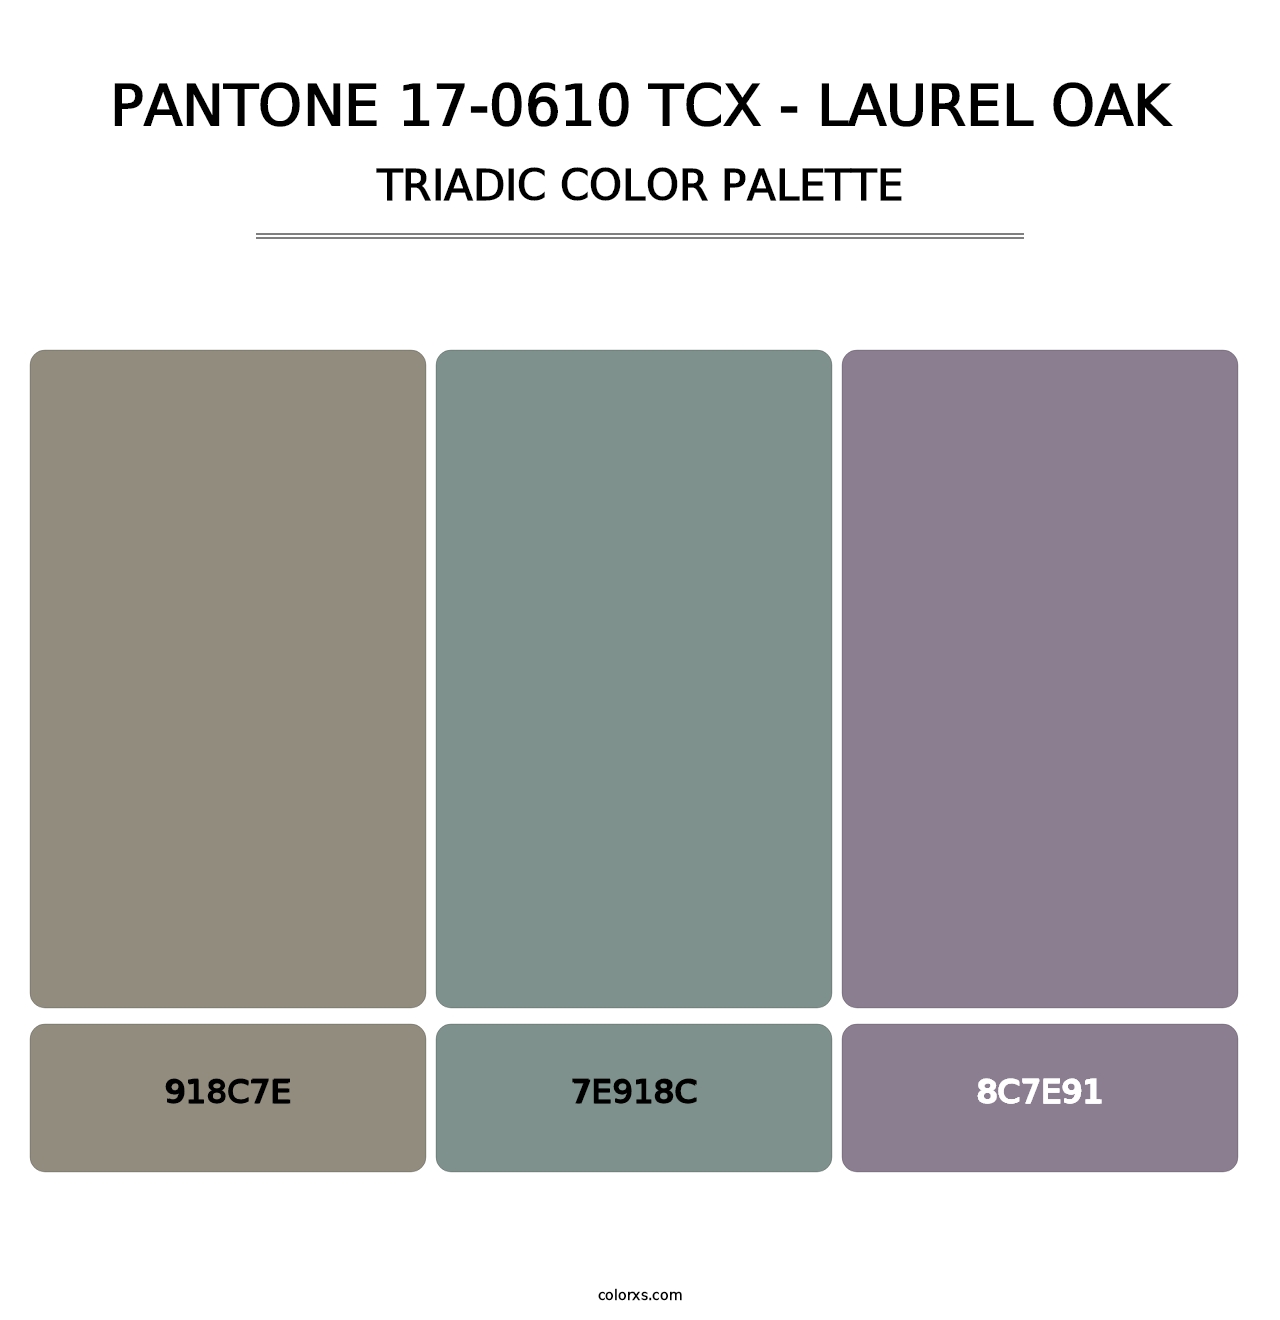 PANTONE 17-0610 TCX - Laurel Oak - Triadic Color Palette